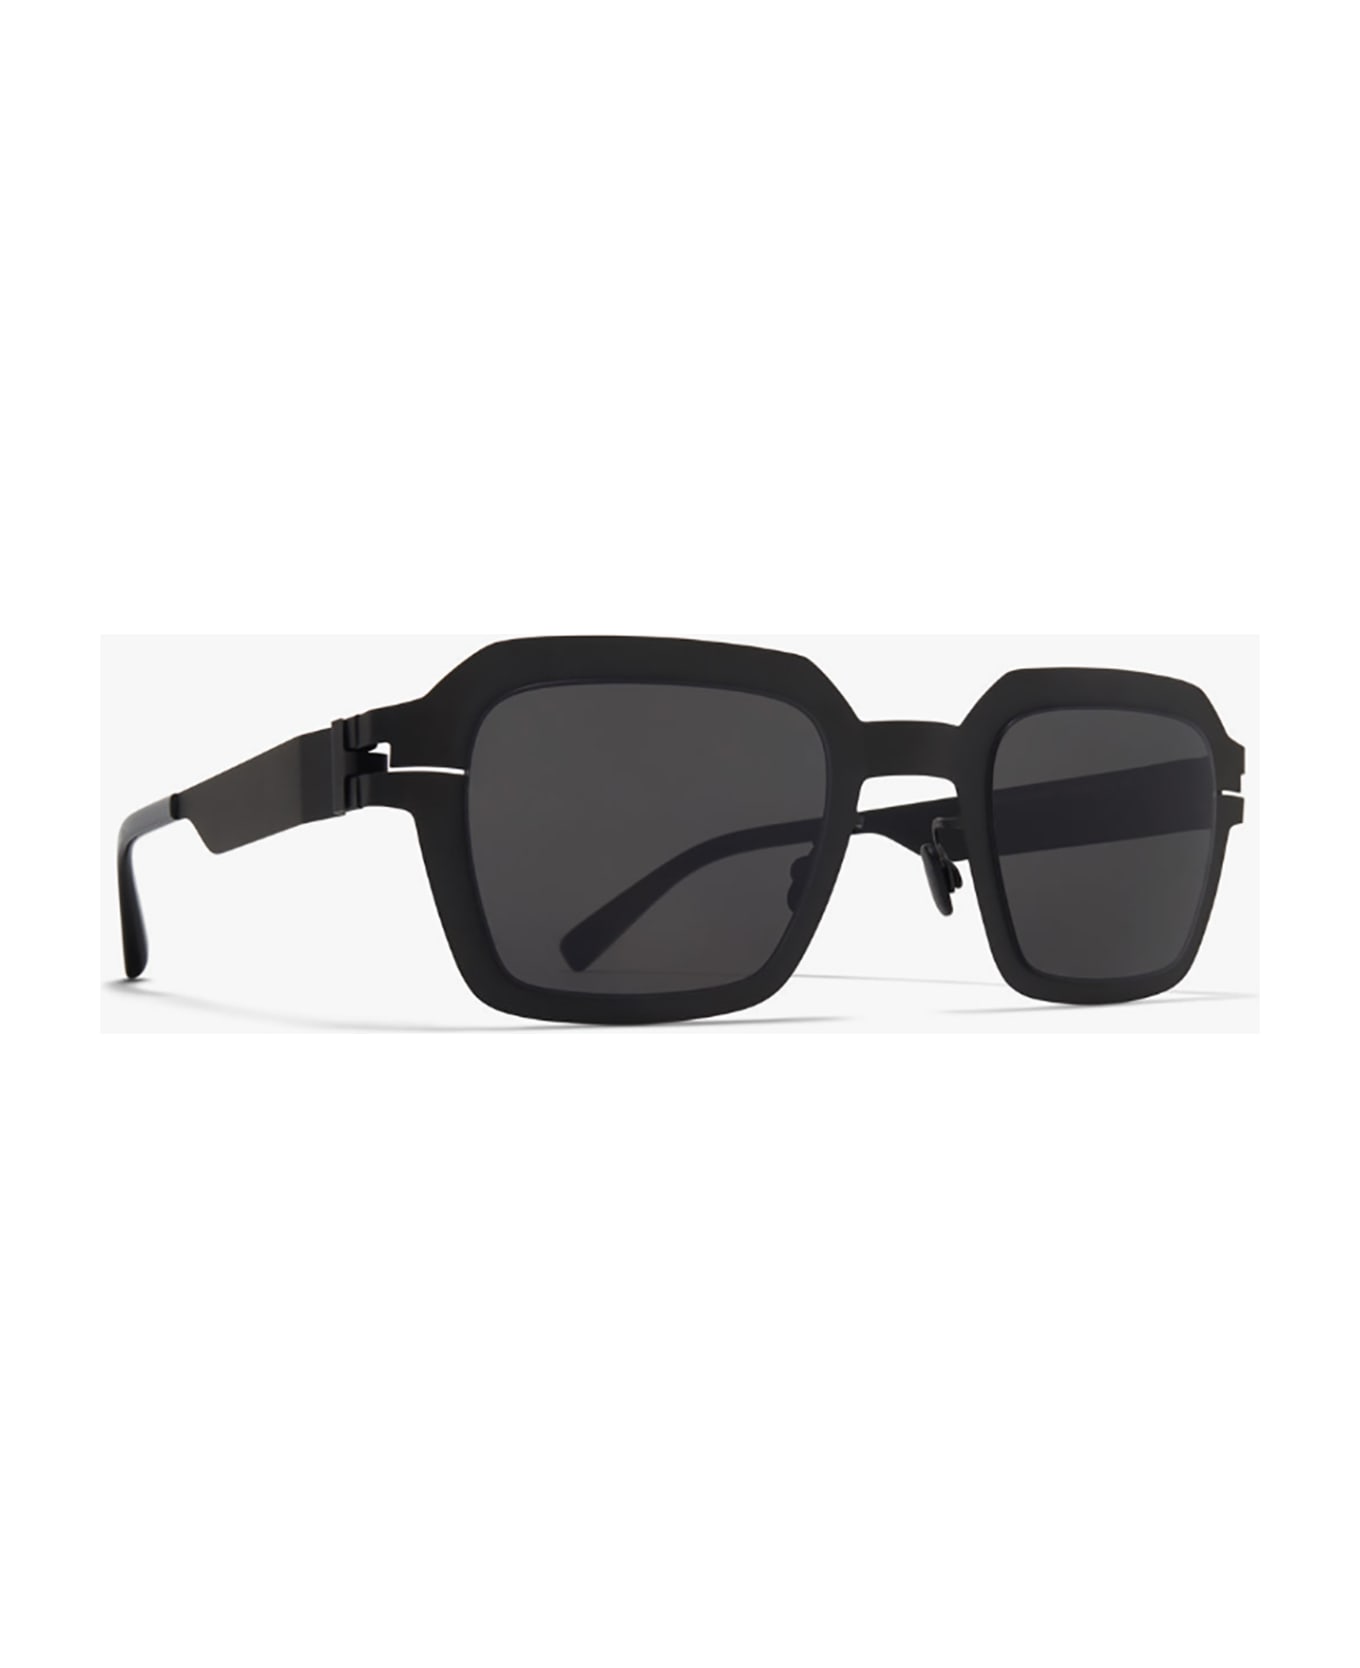 Mykita MOTT Sunglasses - Black Dark Grey Solid